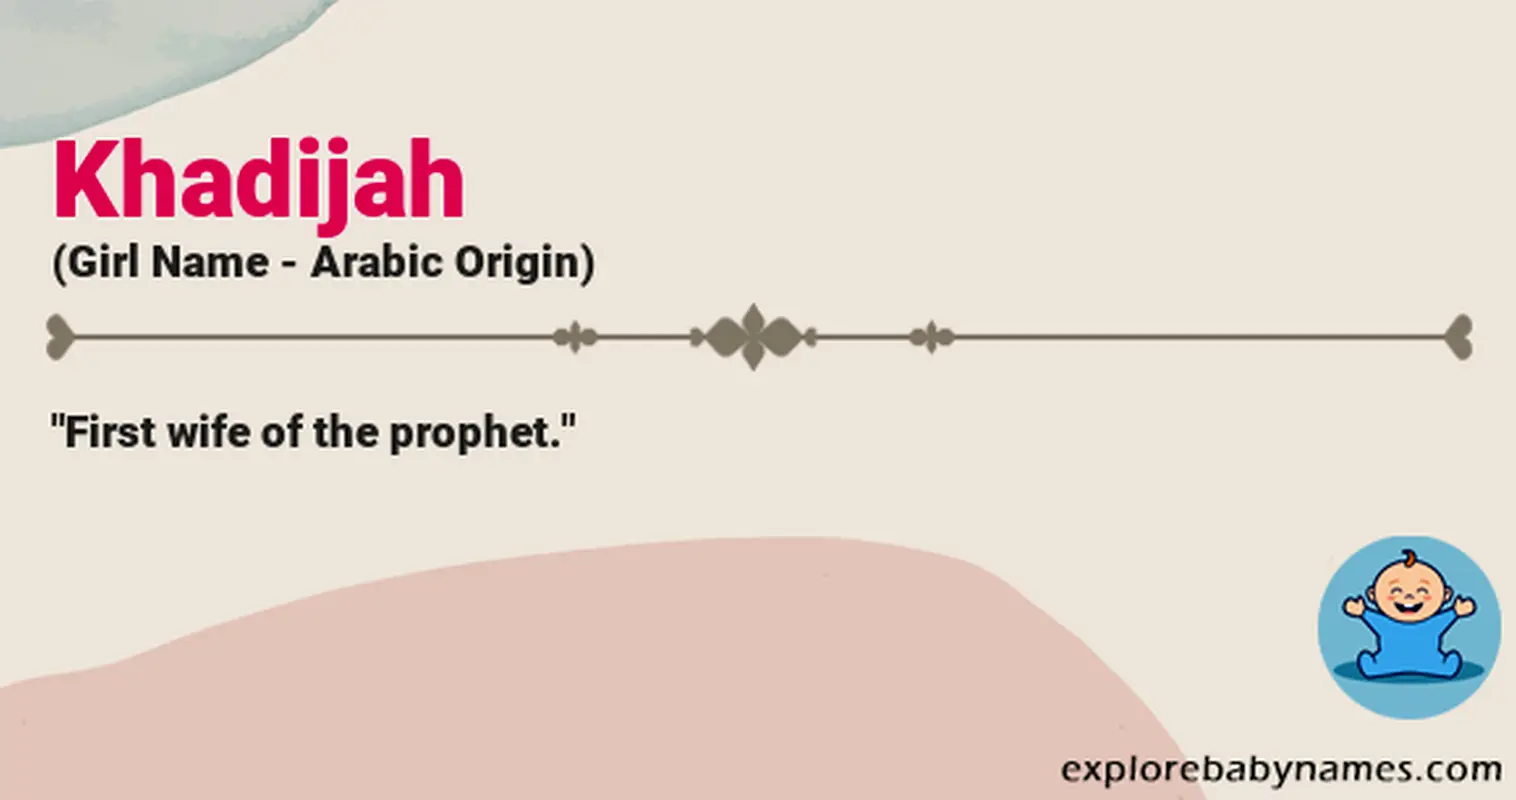 Meaning of Khadijah